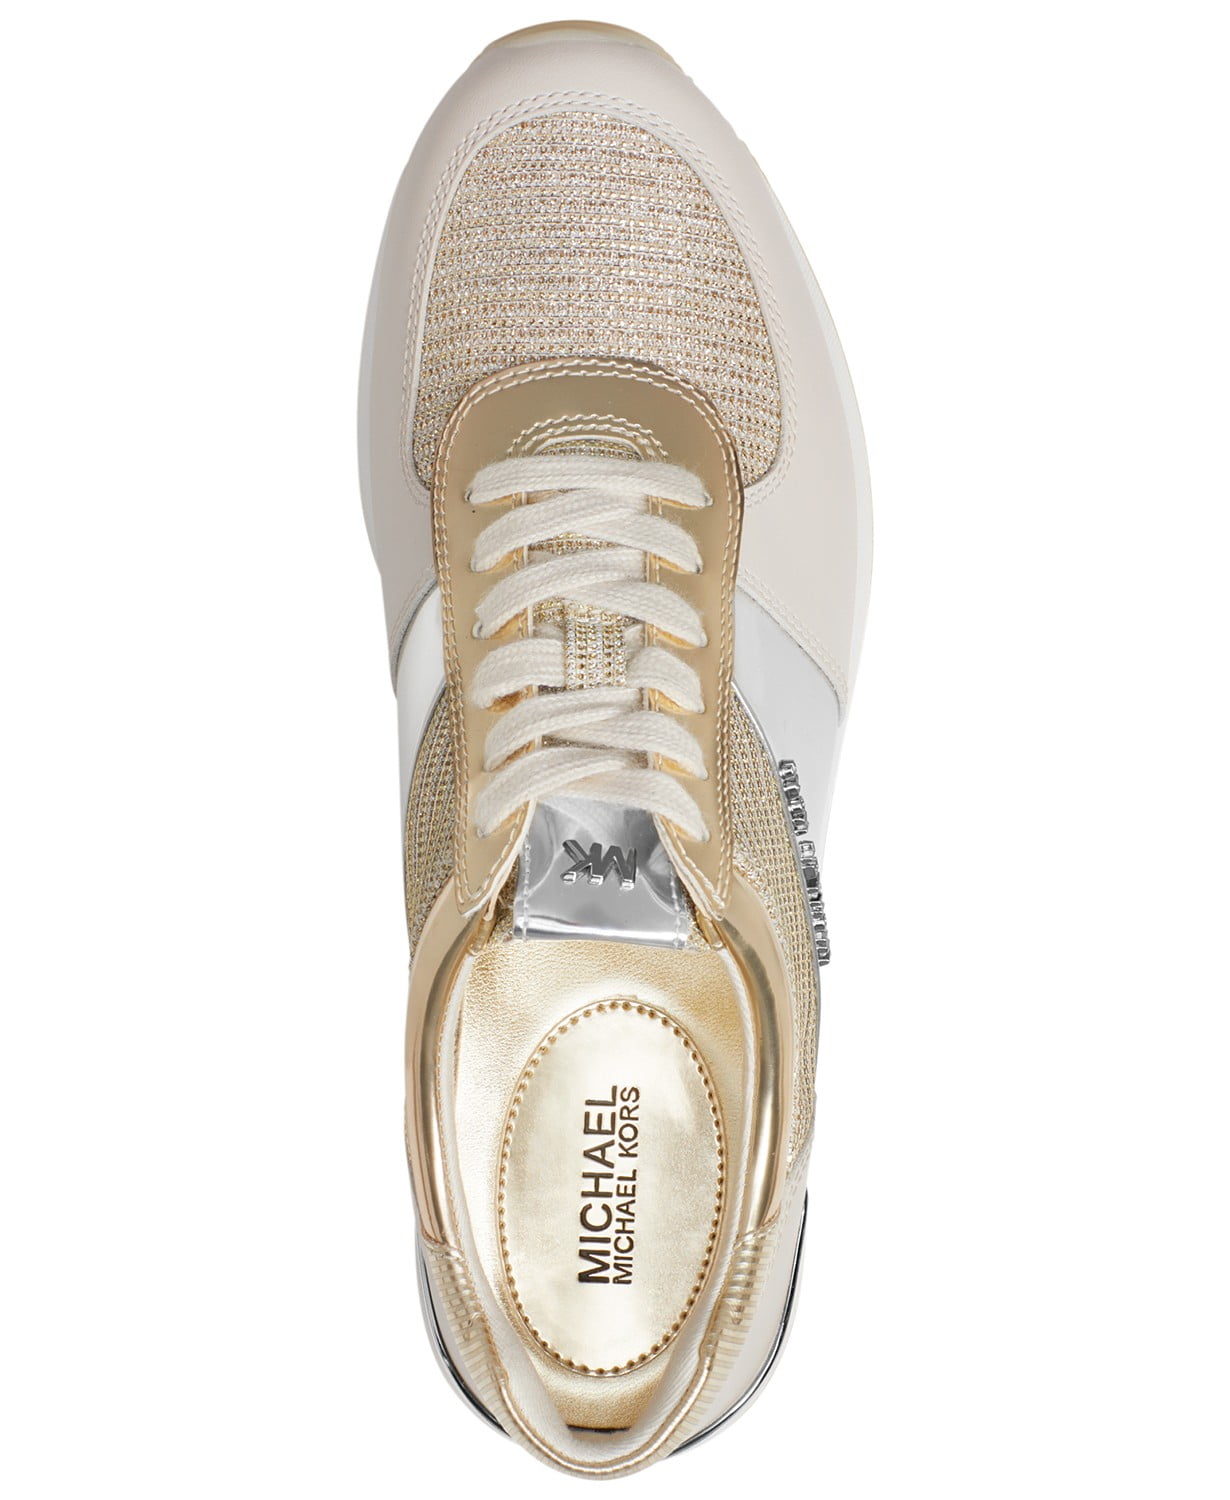 Michael Kors Women's Allie Trainer Glitter Chain Mesh Sneakers Shoes White  Gold (7.5)